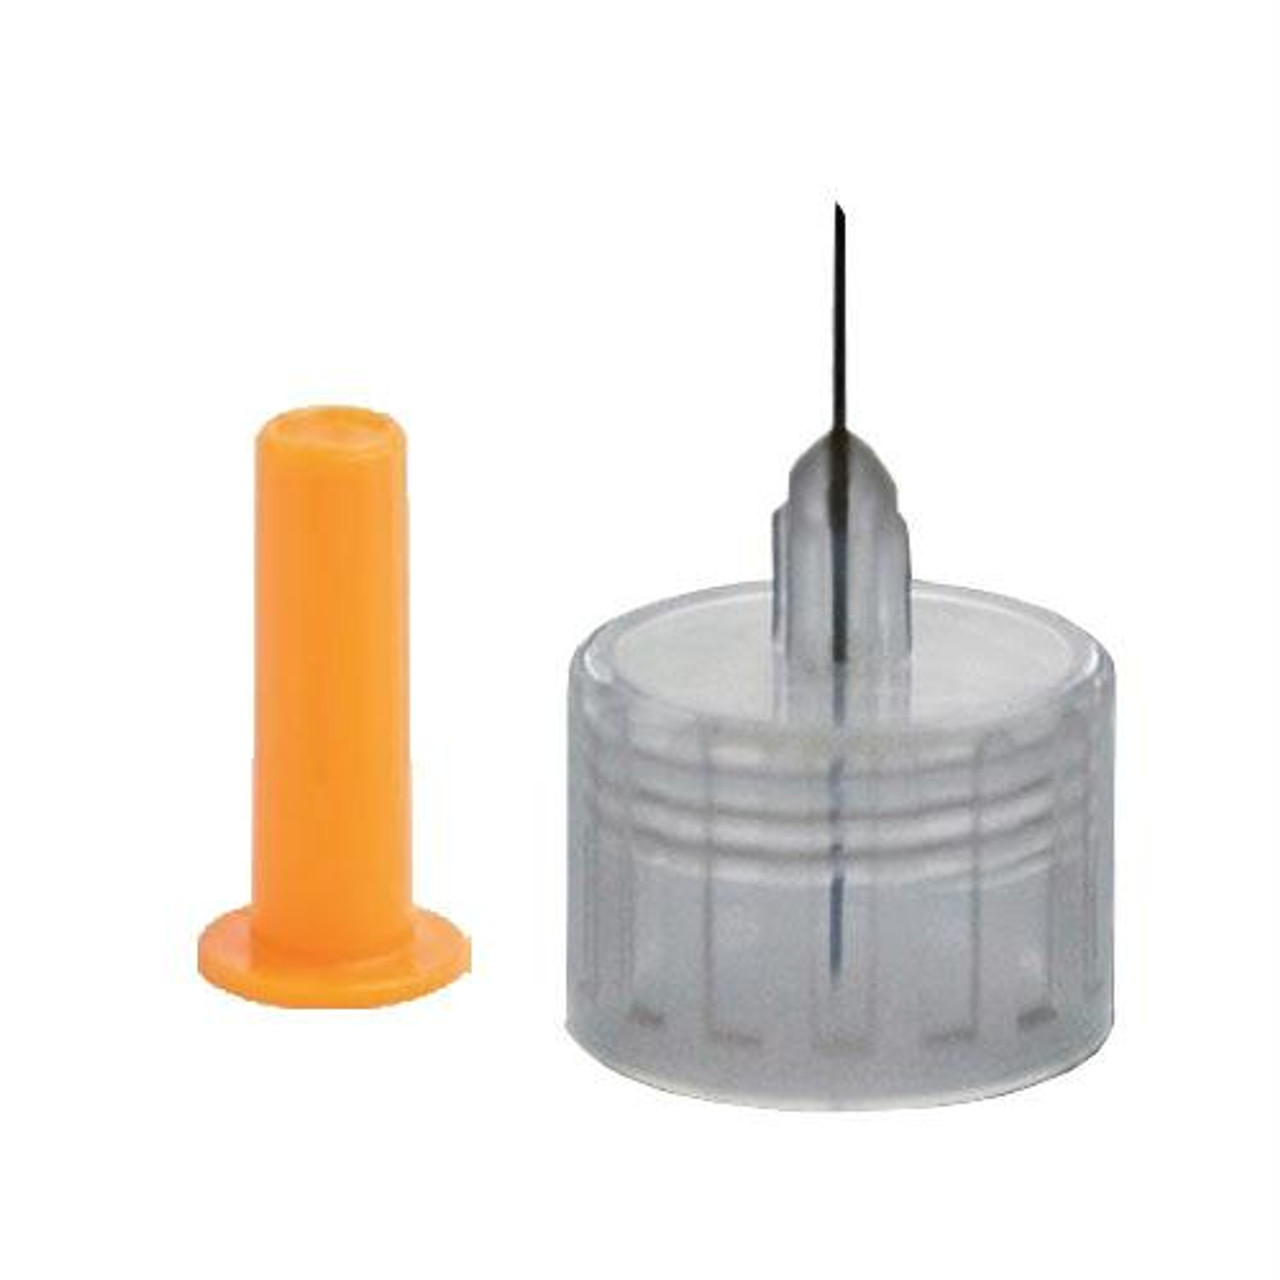 MedtFine Diabetes Pen Needles (32G 5mm) 400 pieces